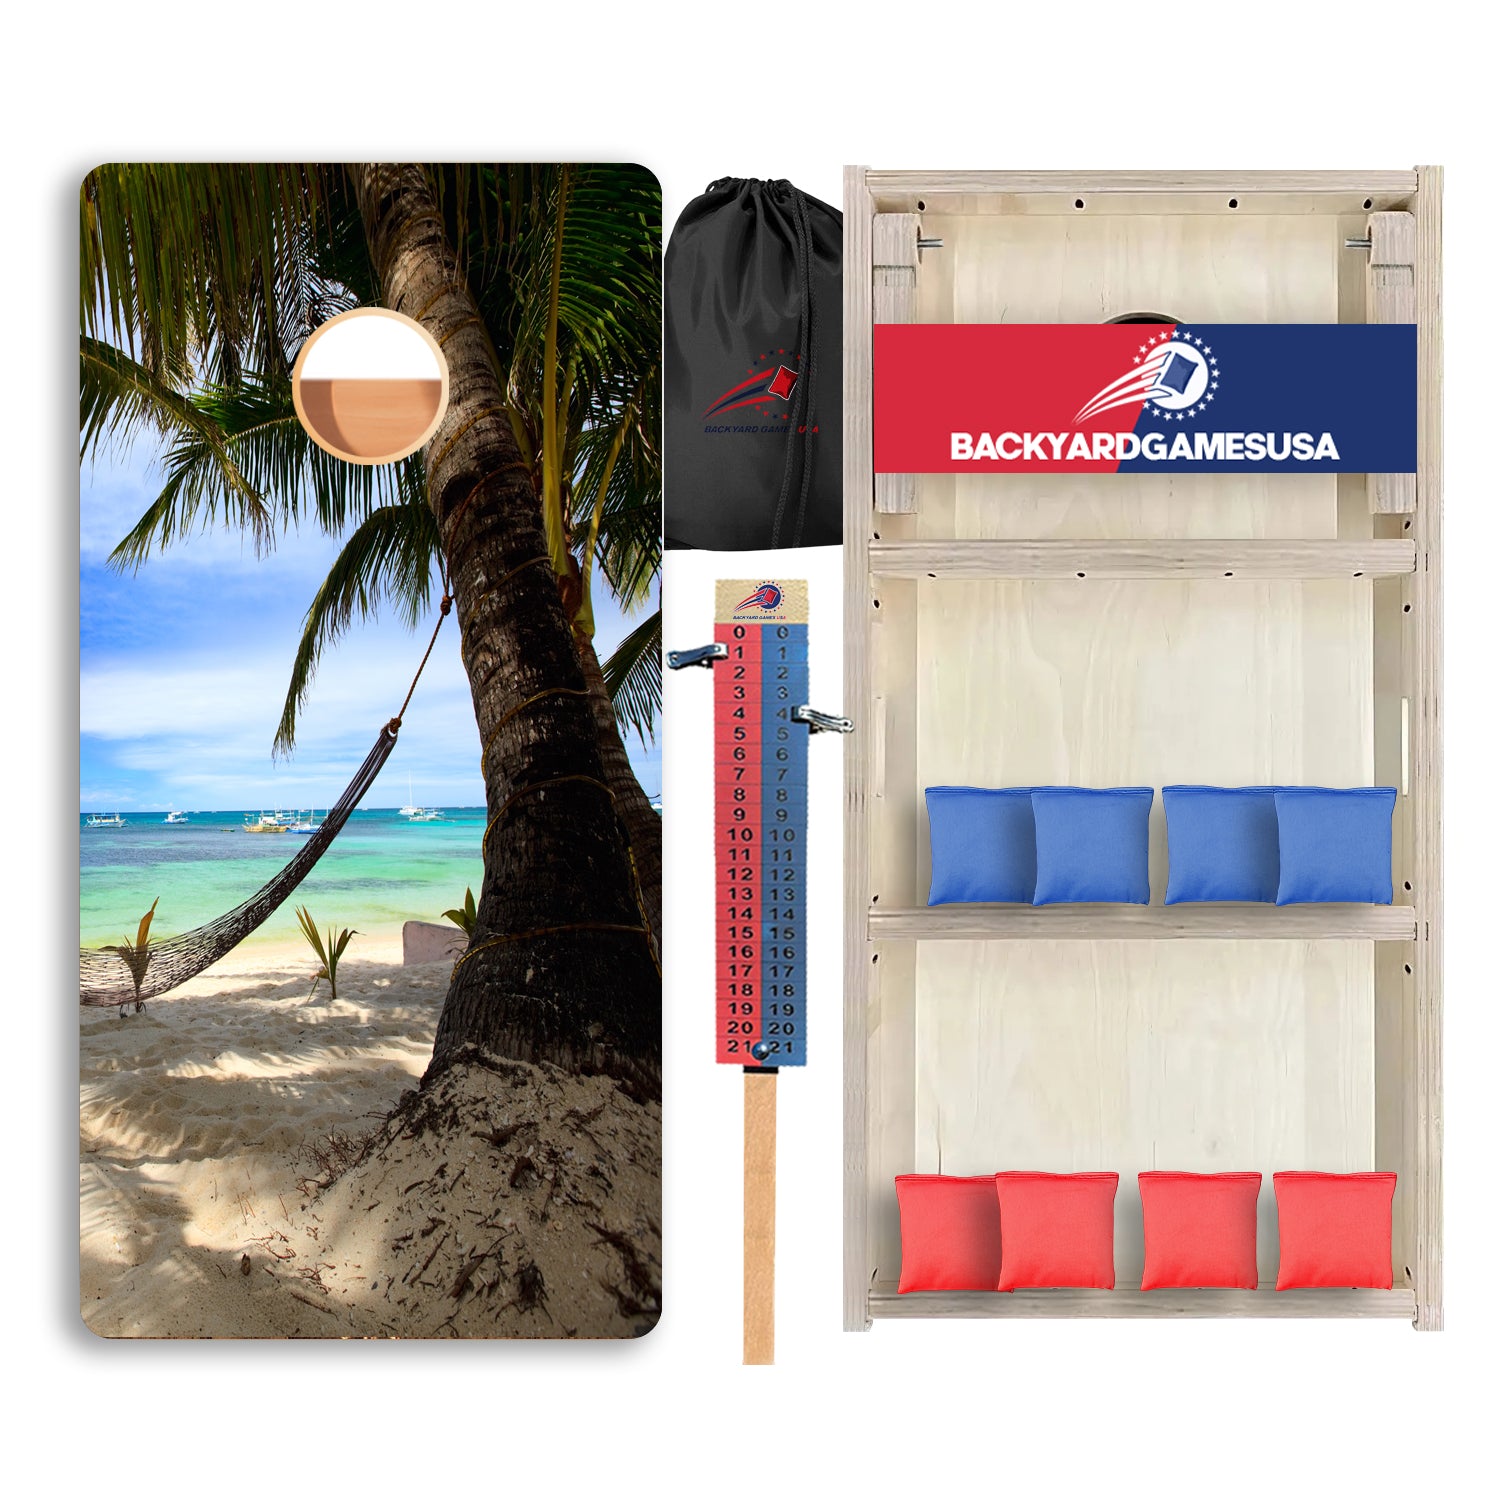 Palm Tree on Beach Professional Cornhole Boards